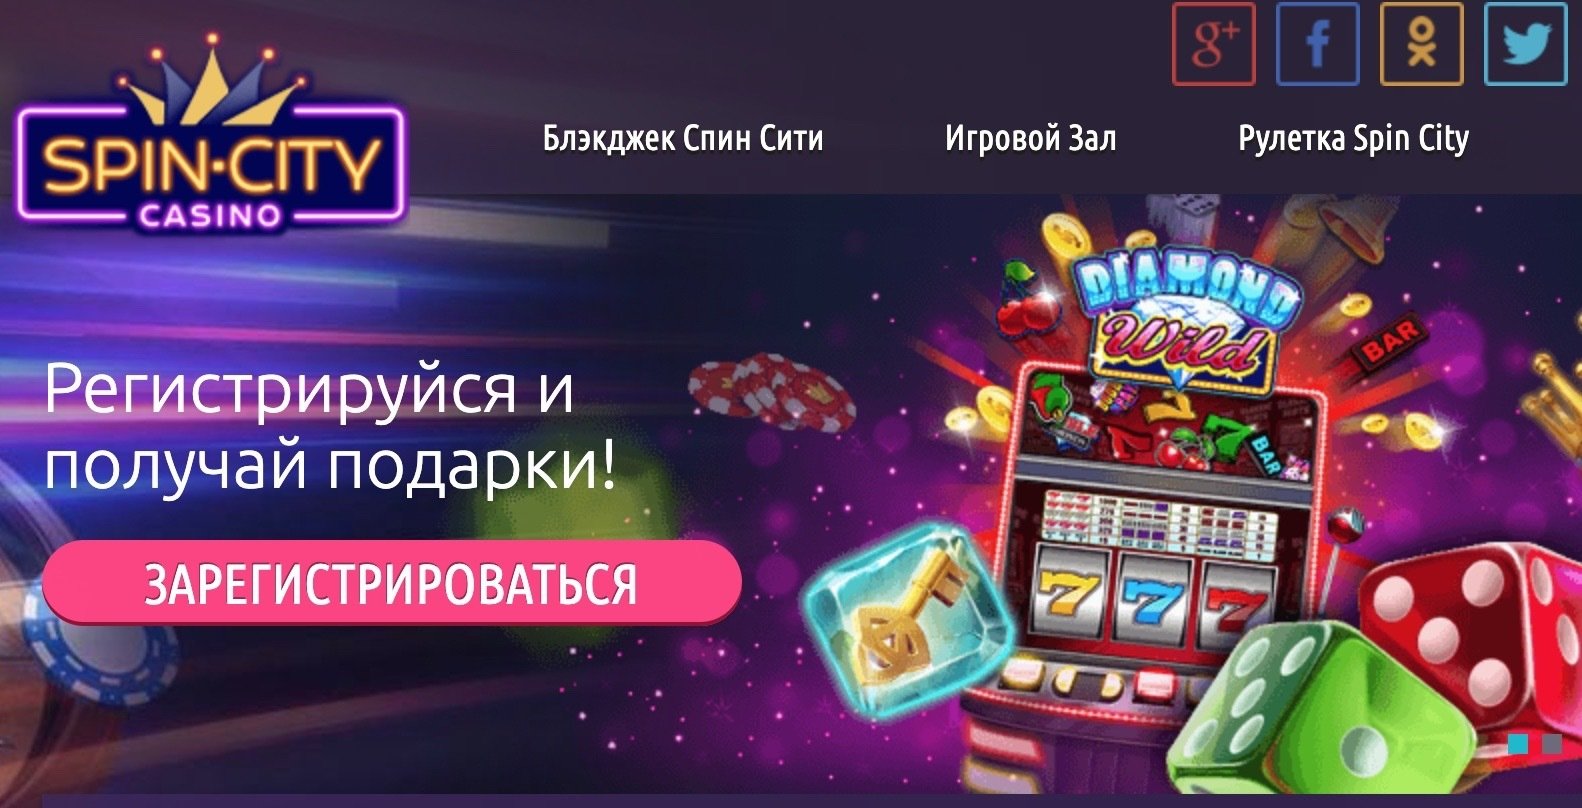 Clubnika casino